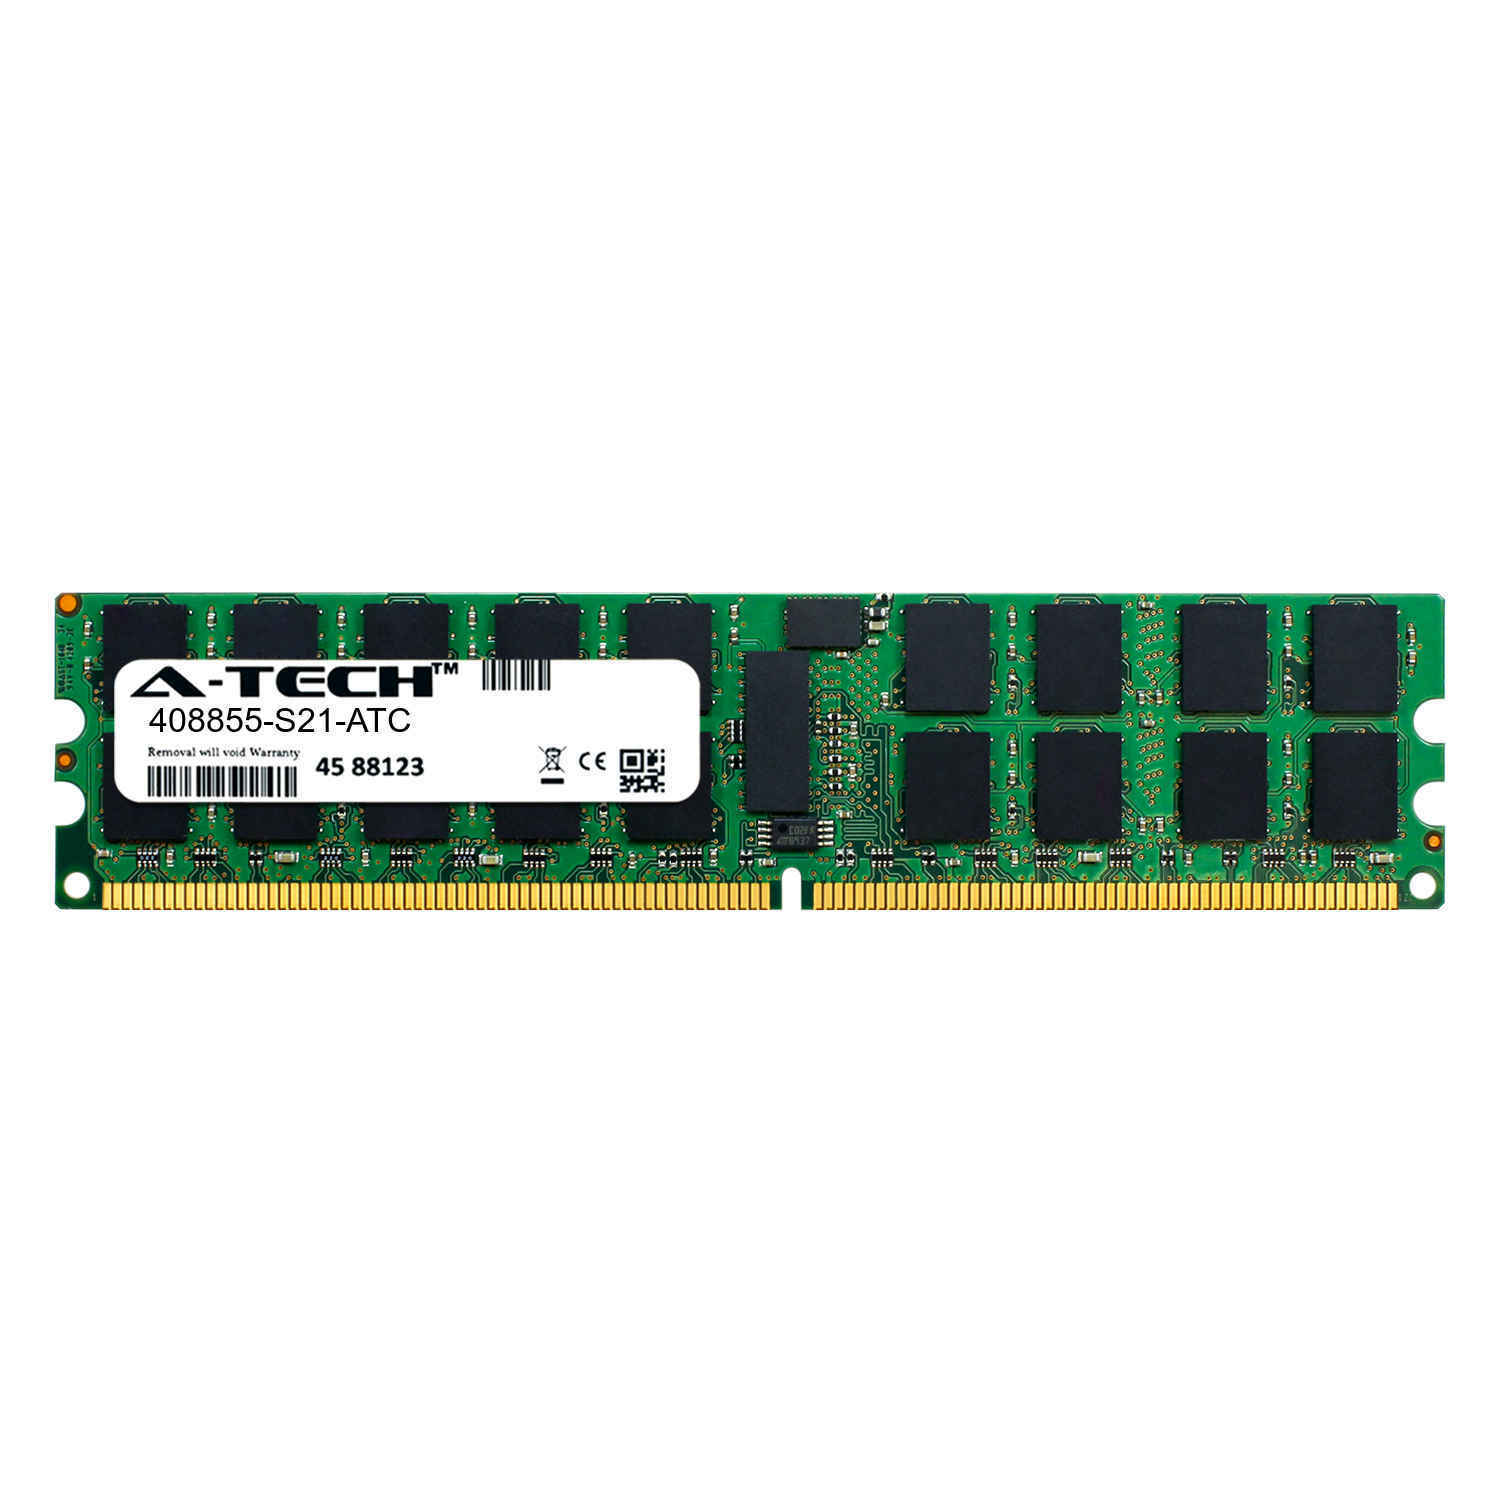 8GB DDR2 PC2-5300R 667MHz RDIMM (HP 408855-S21 Equivalent) Server Memory RAM